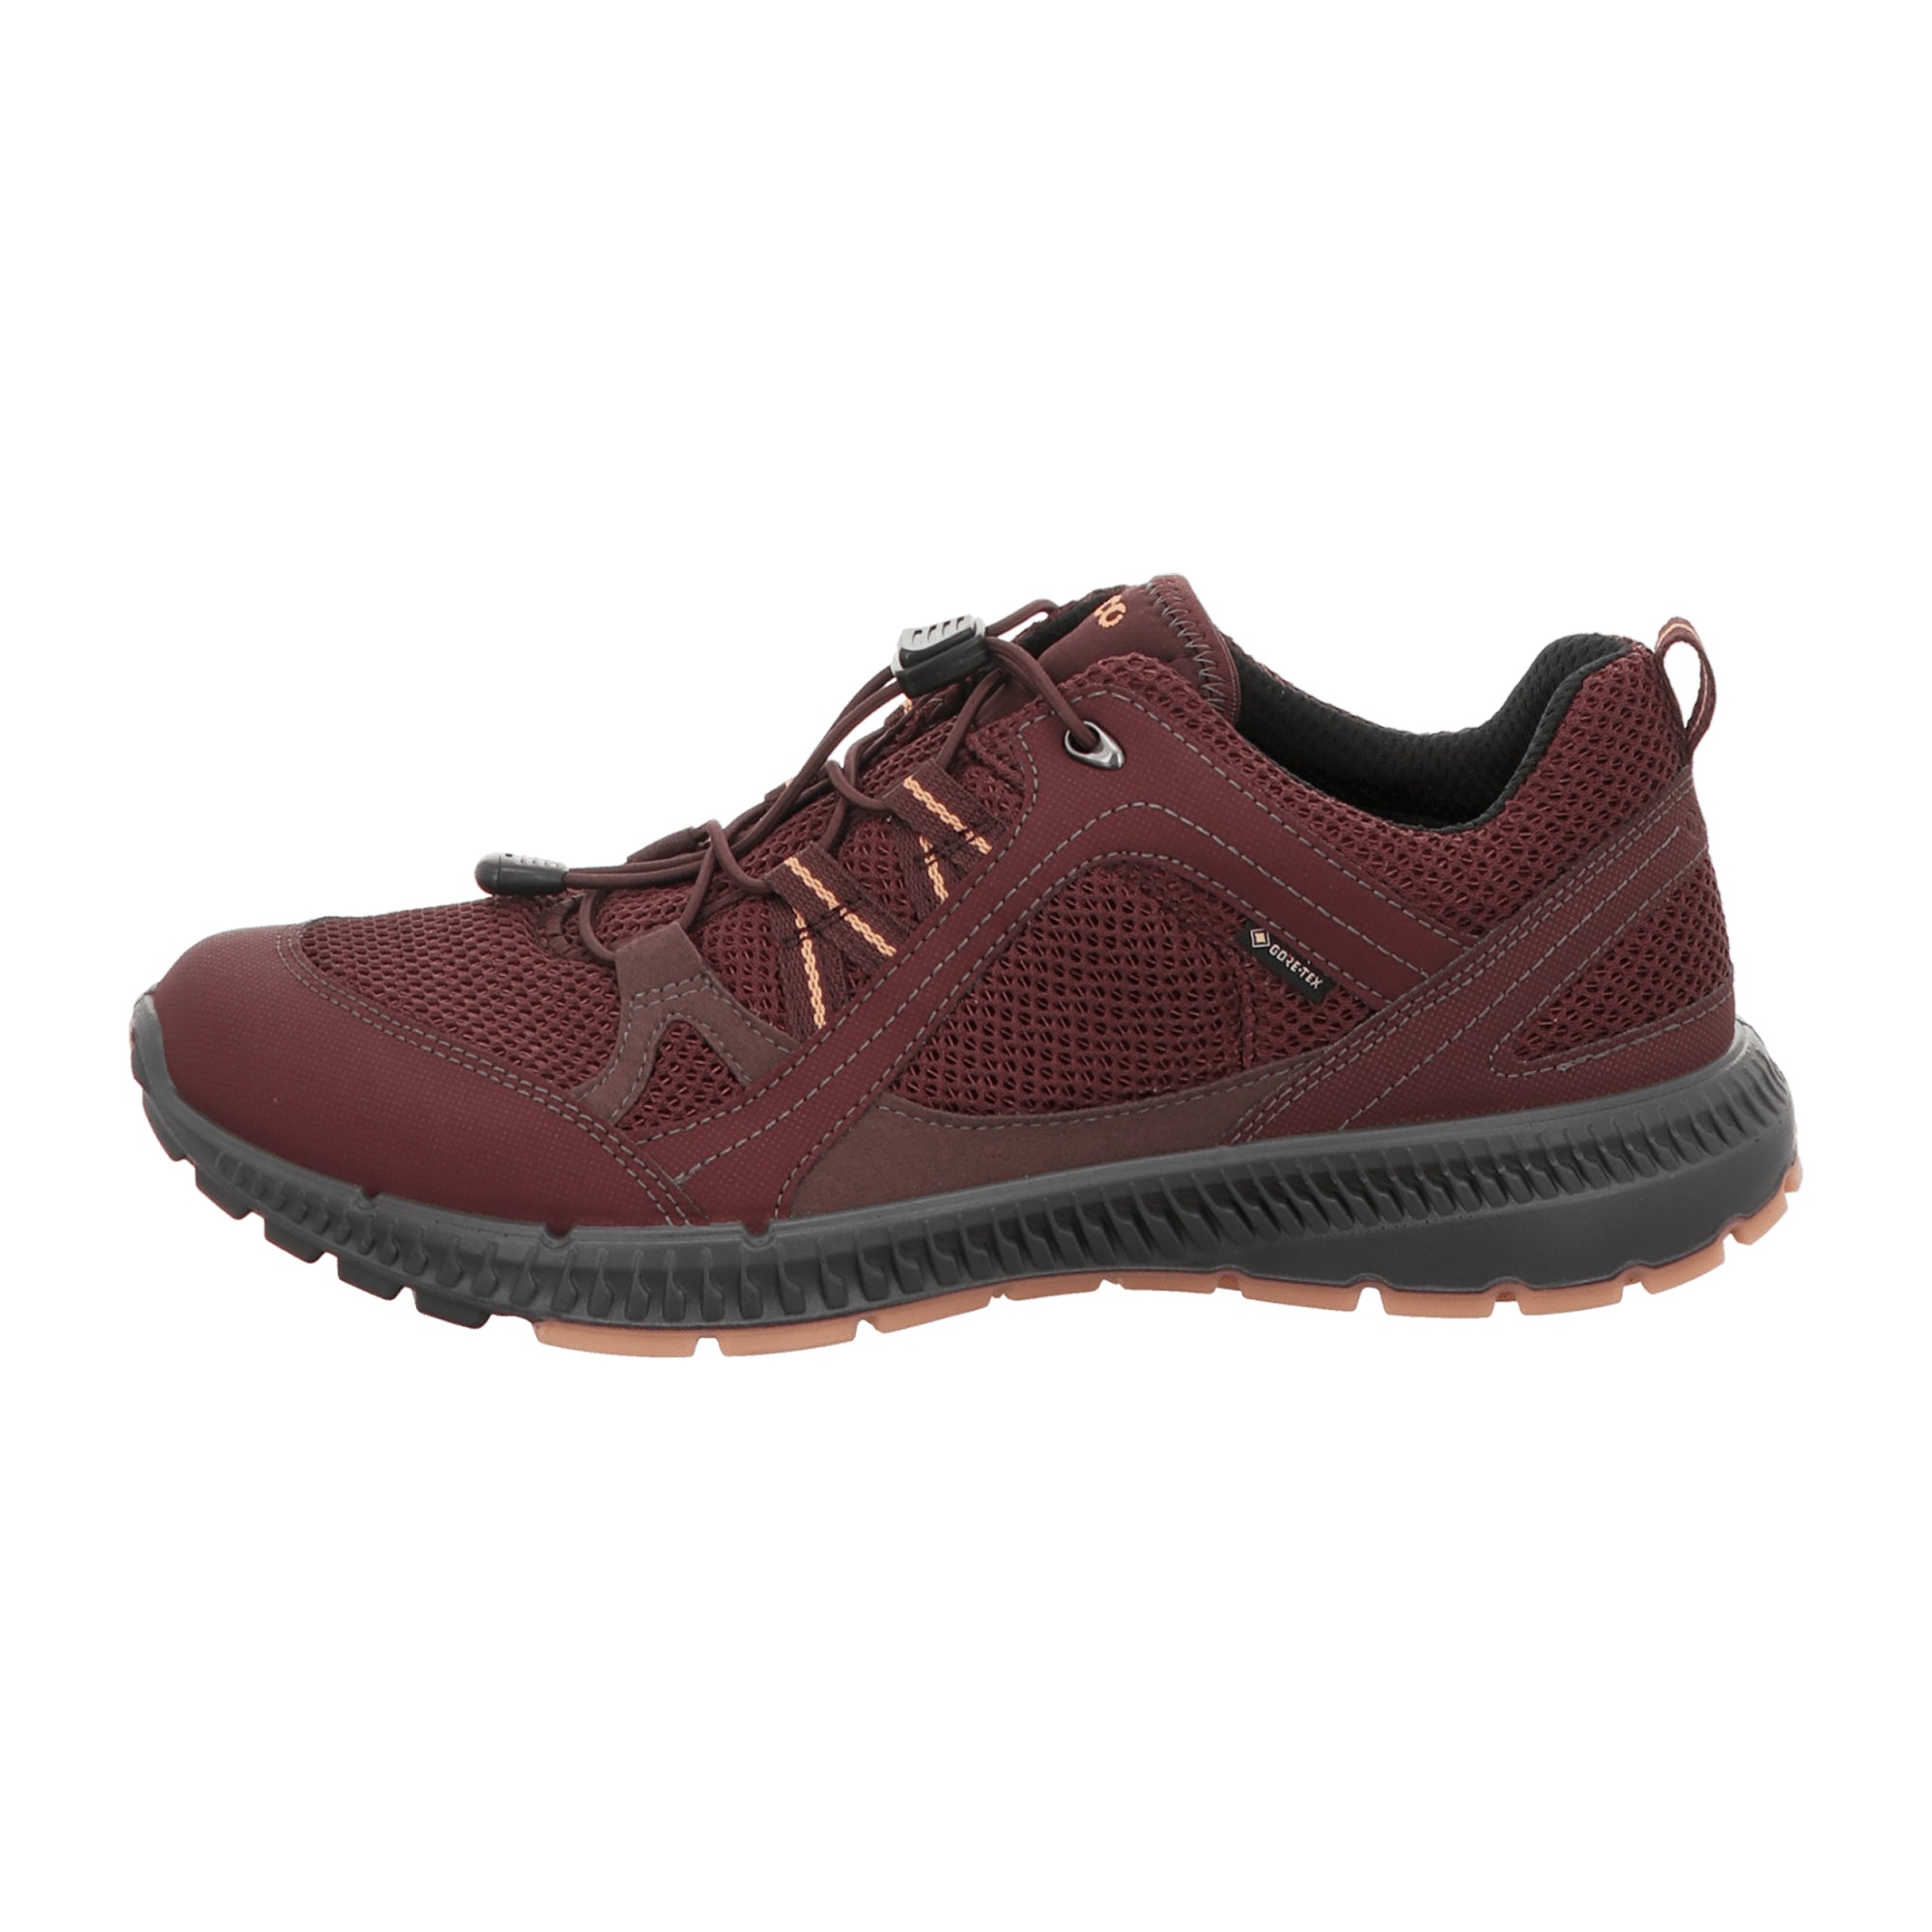 Ecco Terracruise II Women's Red Walking Shoes - Lightweight & Durable Outdoor Trainers